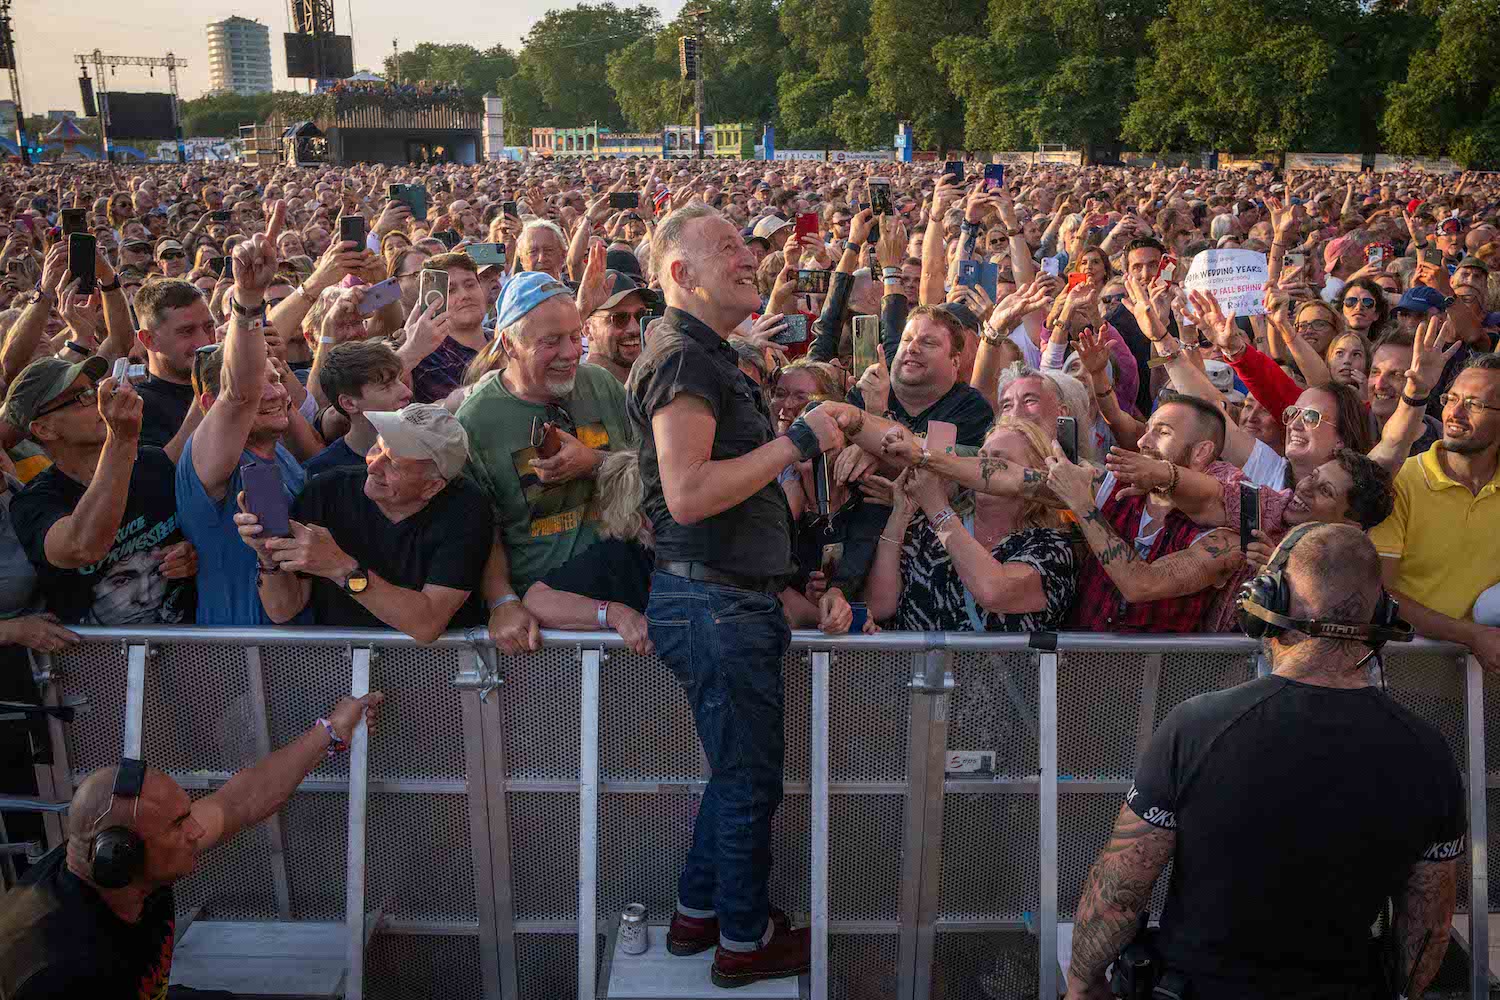 Bruce Springsteen & E Street Band at BST Hyde Park, London, U.K. on July 6, 2023.